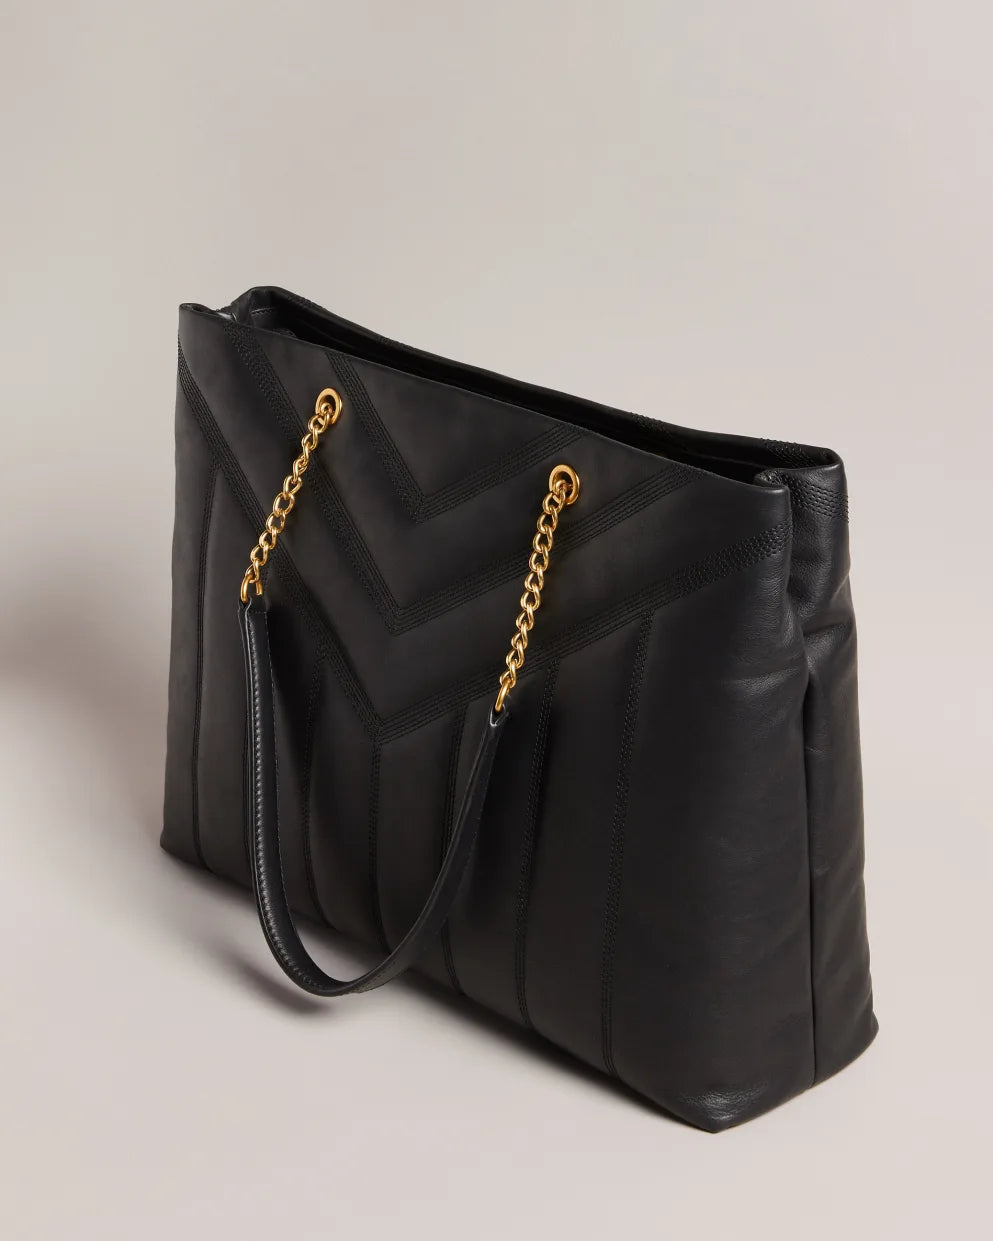 The Black Ayalia Puffer Tote Bag